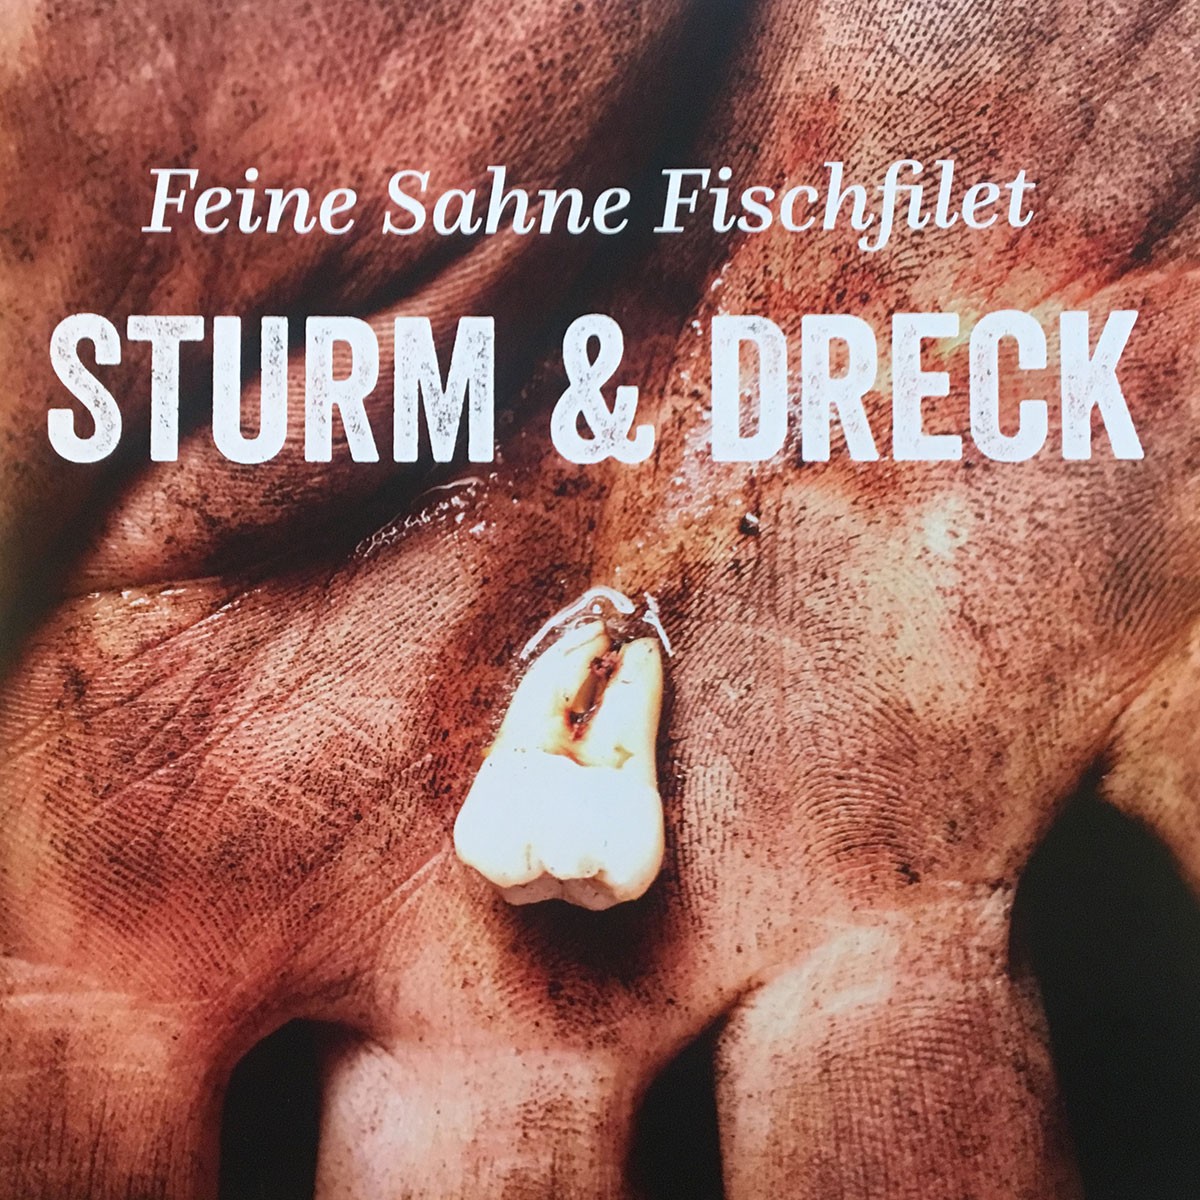 Feine Sahne Fischfilet - Sturm & Dreck - Cover